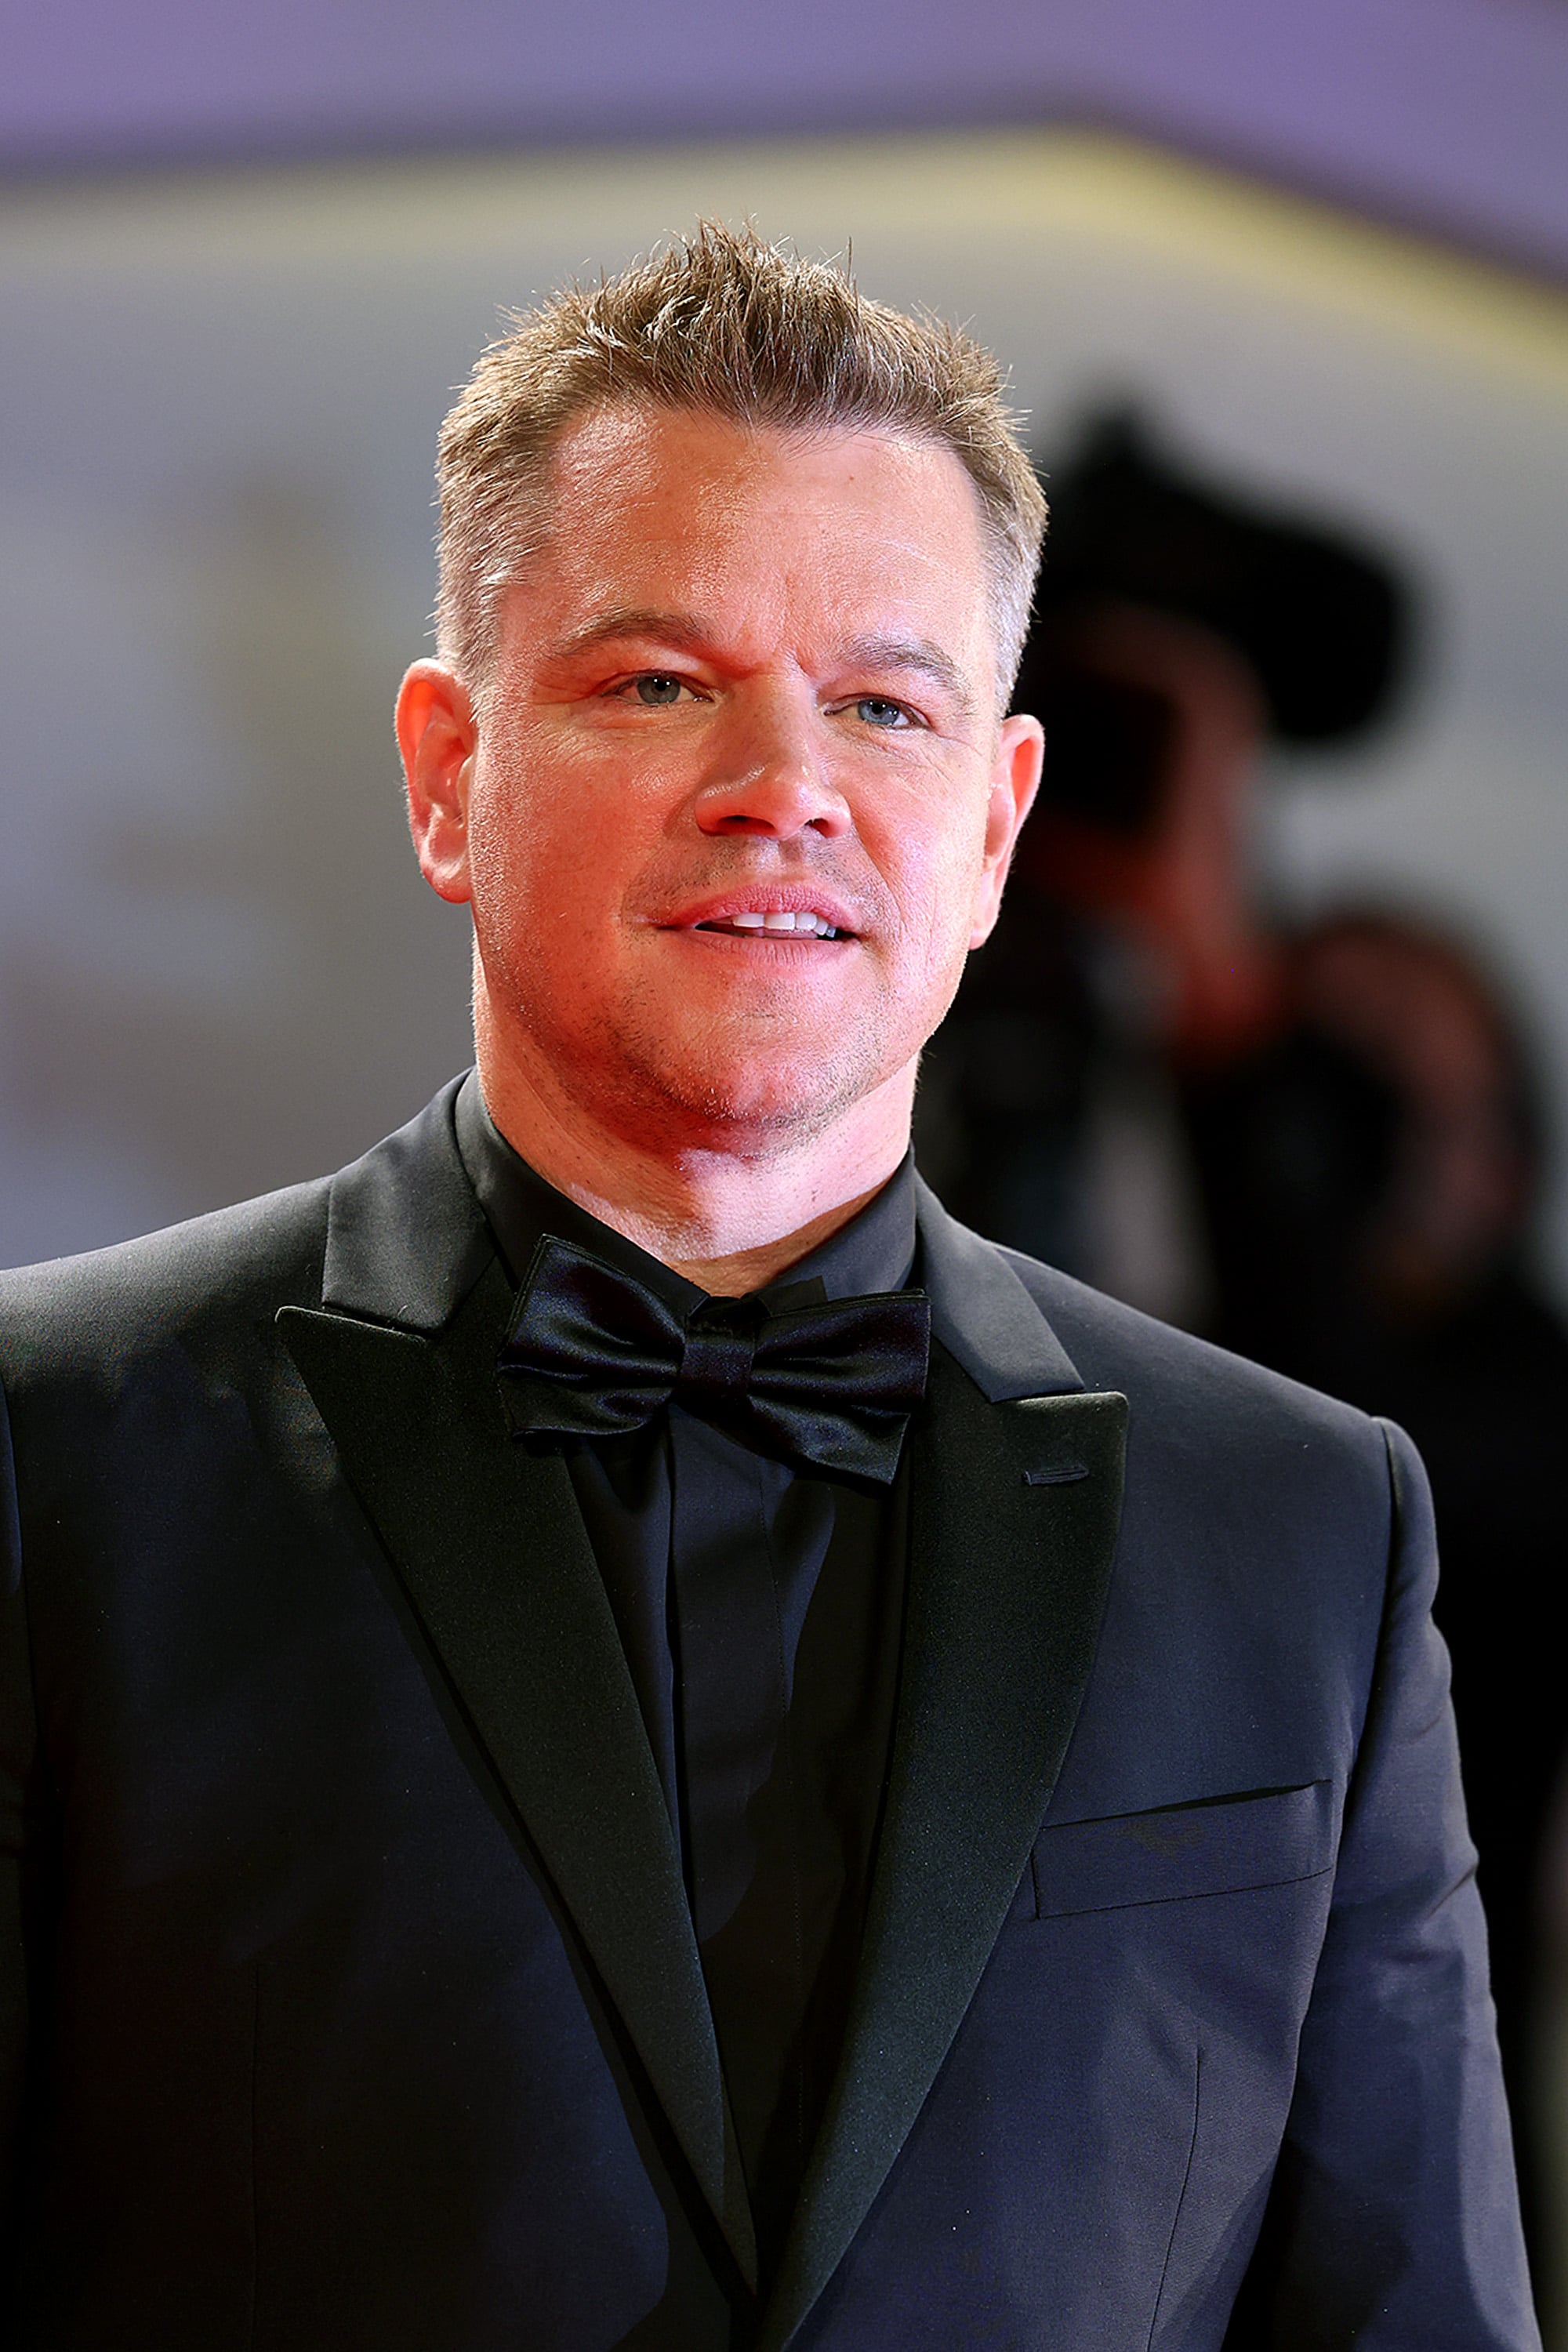 VENICE, ITALY - SEPTEMBER 10: Matt Damon attends the red carpet of the movie 